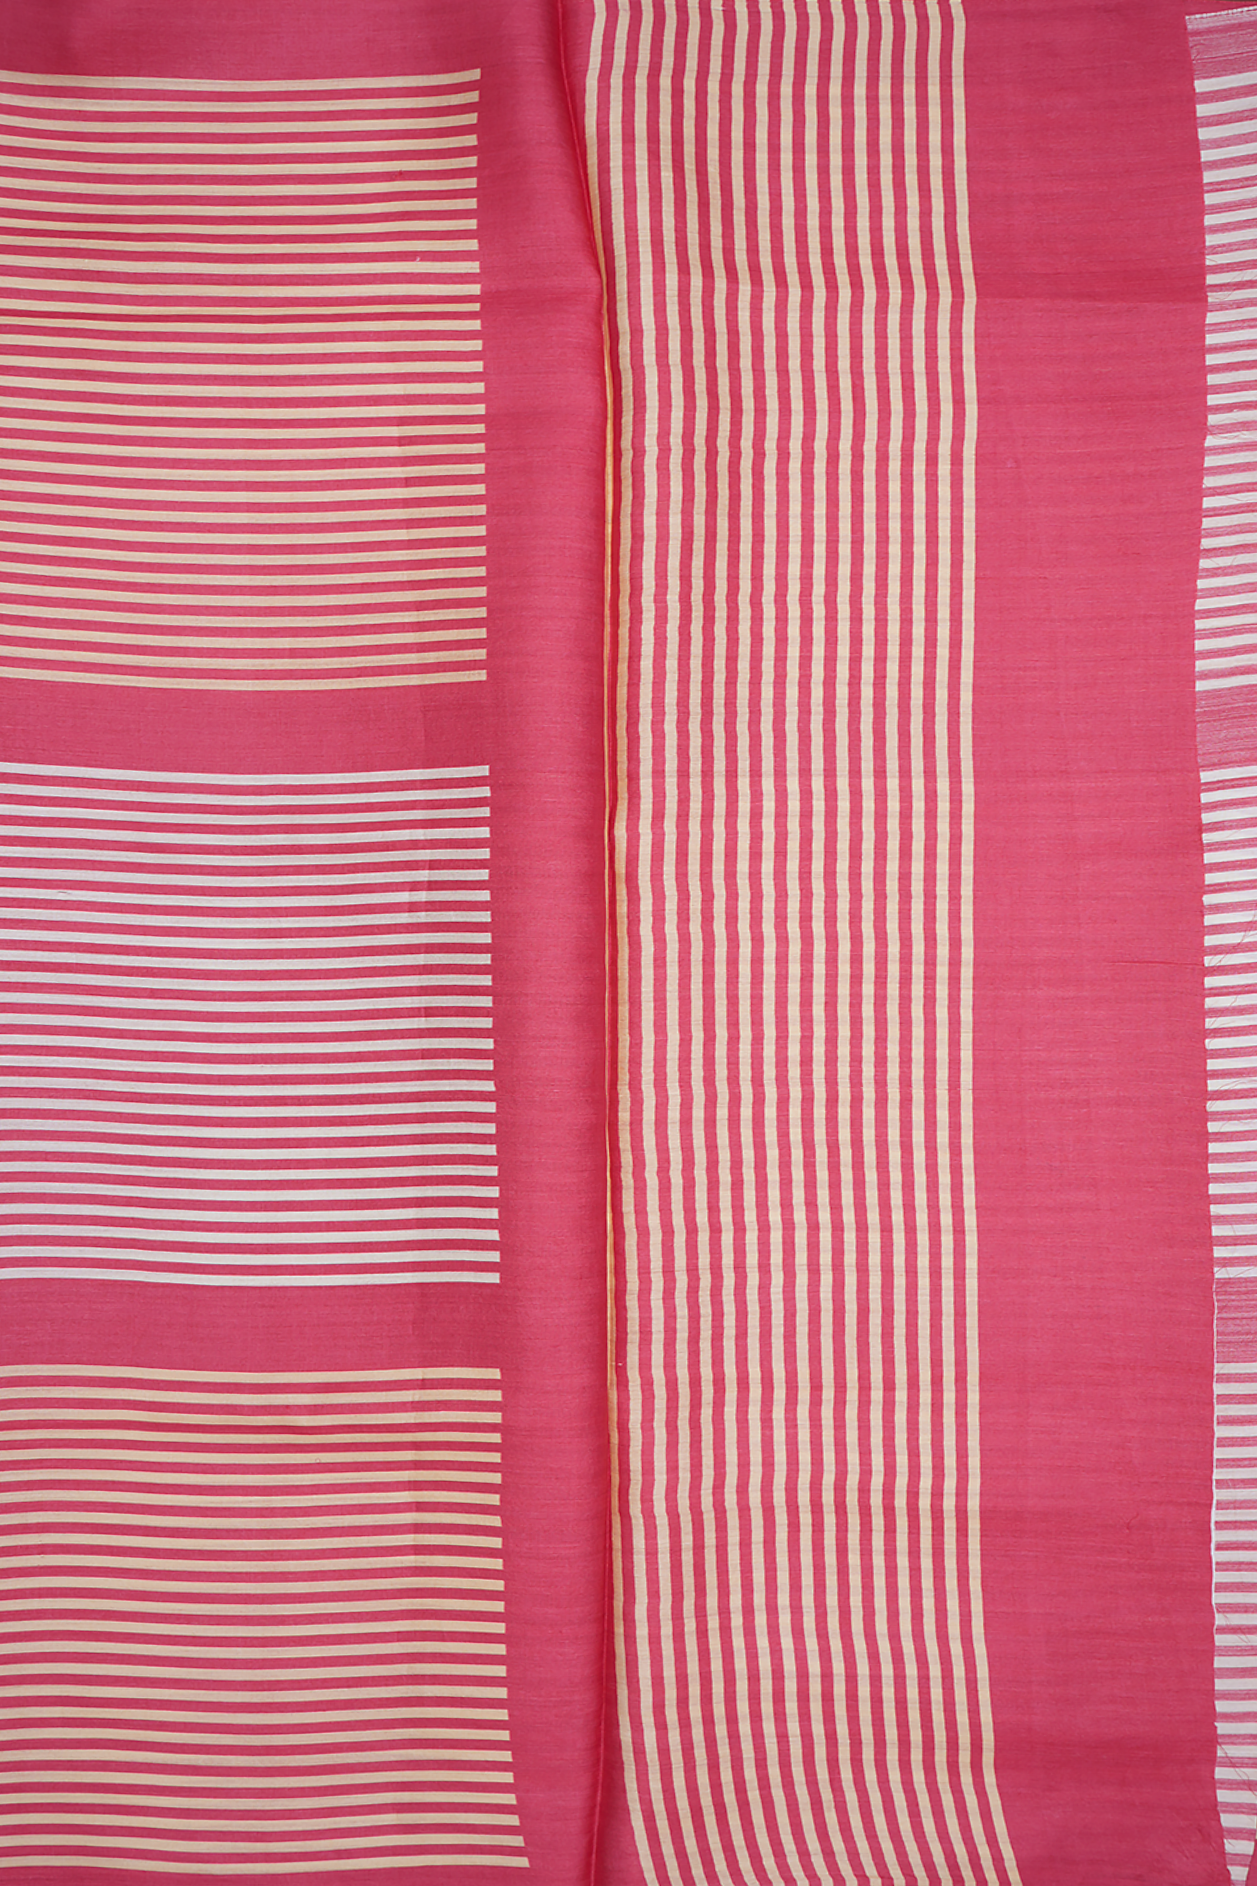 Allover Stripes Design Red And Tan Tussar Silk Saree